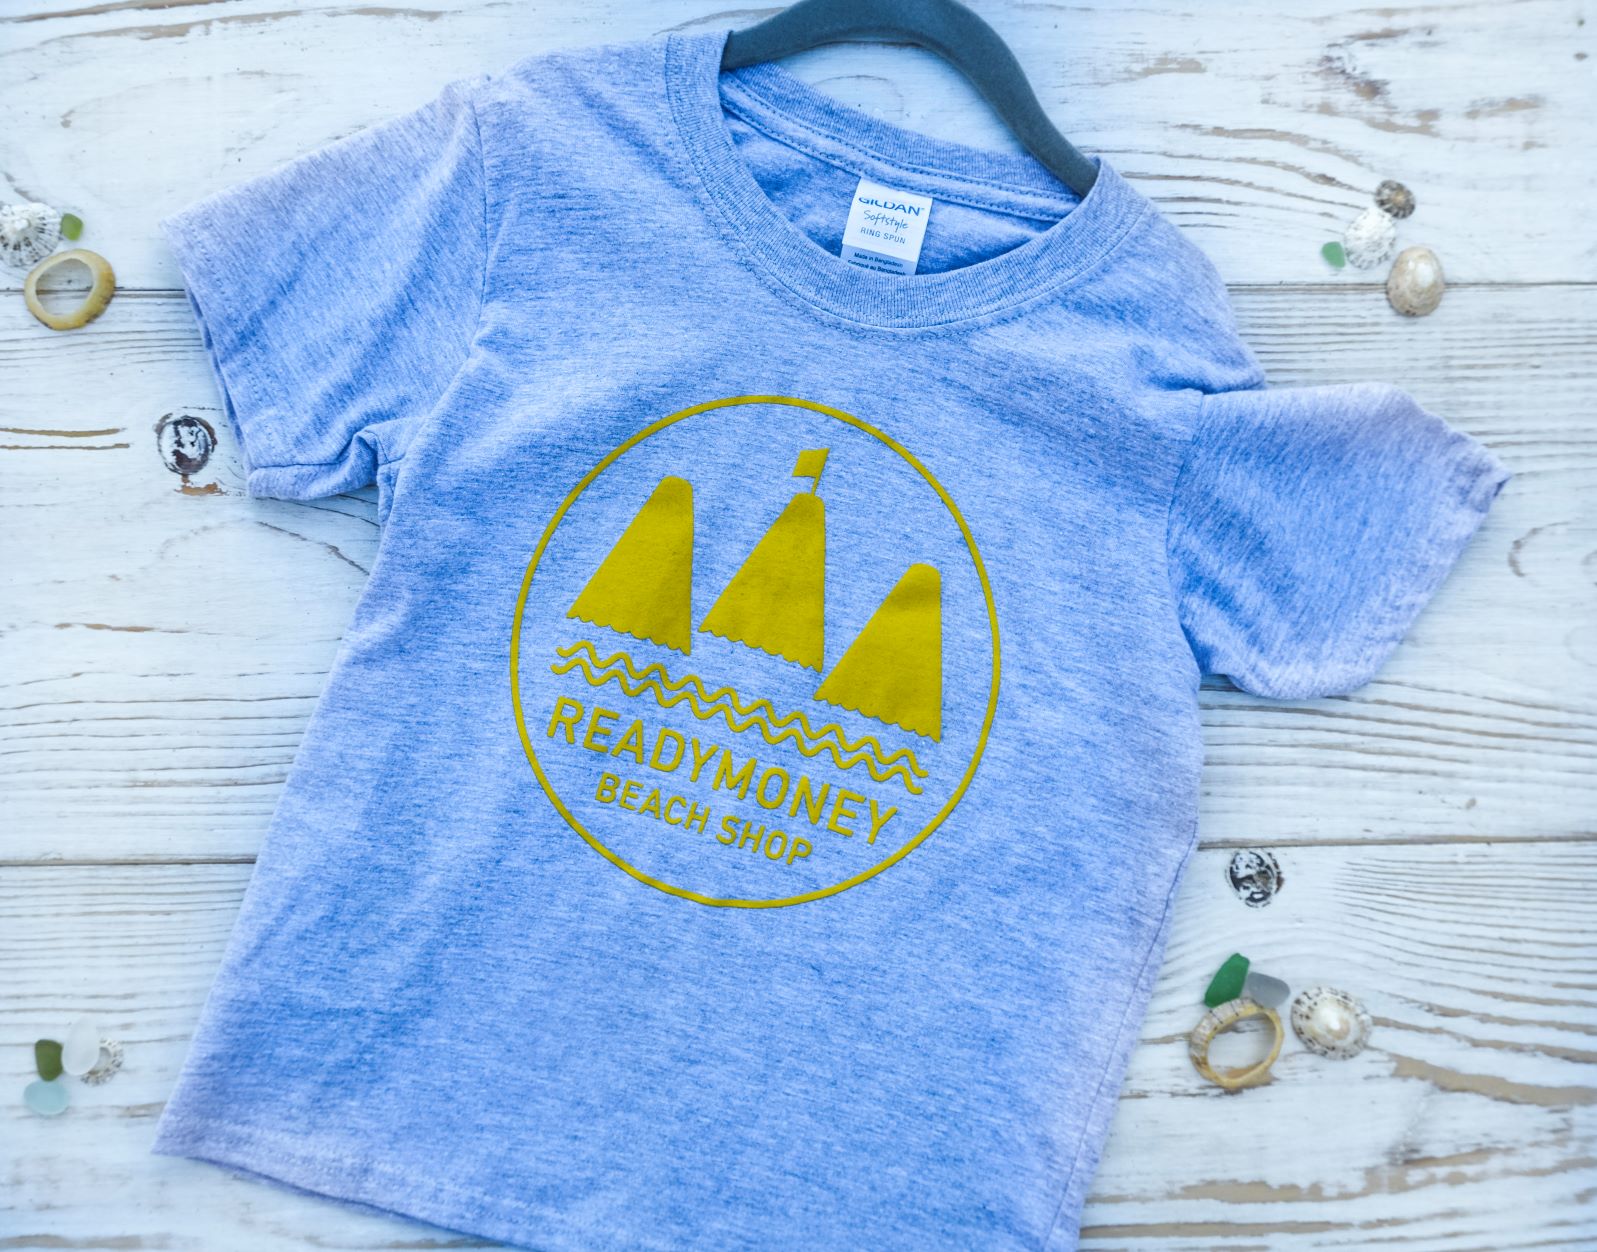 Grey children's tshirt with yellow Readymoney Beach Shop logo